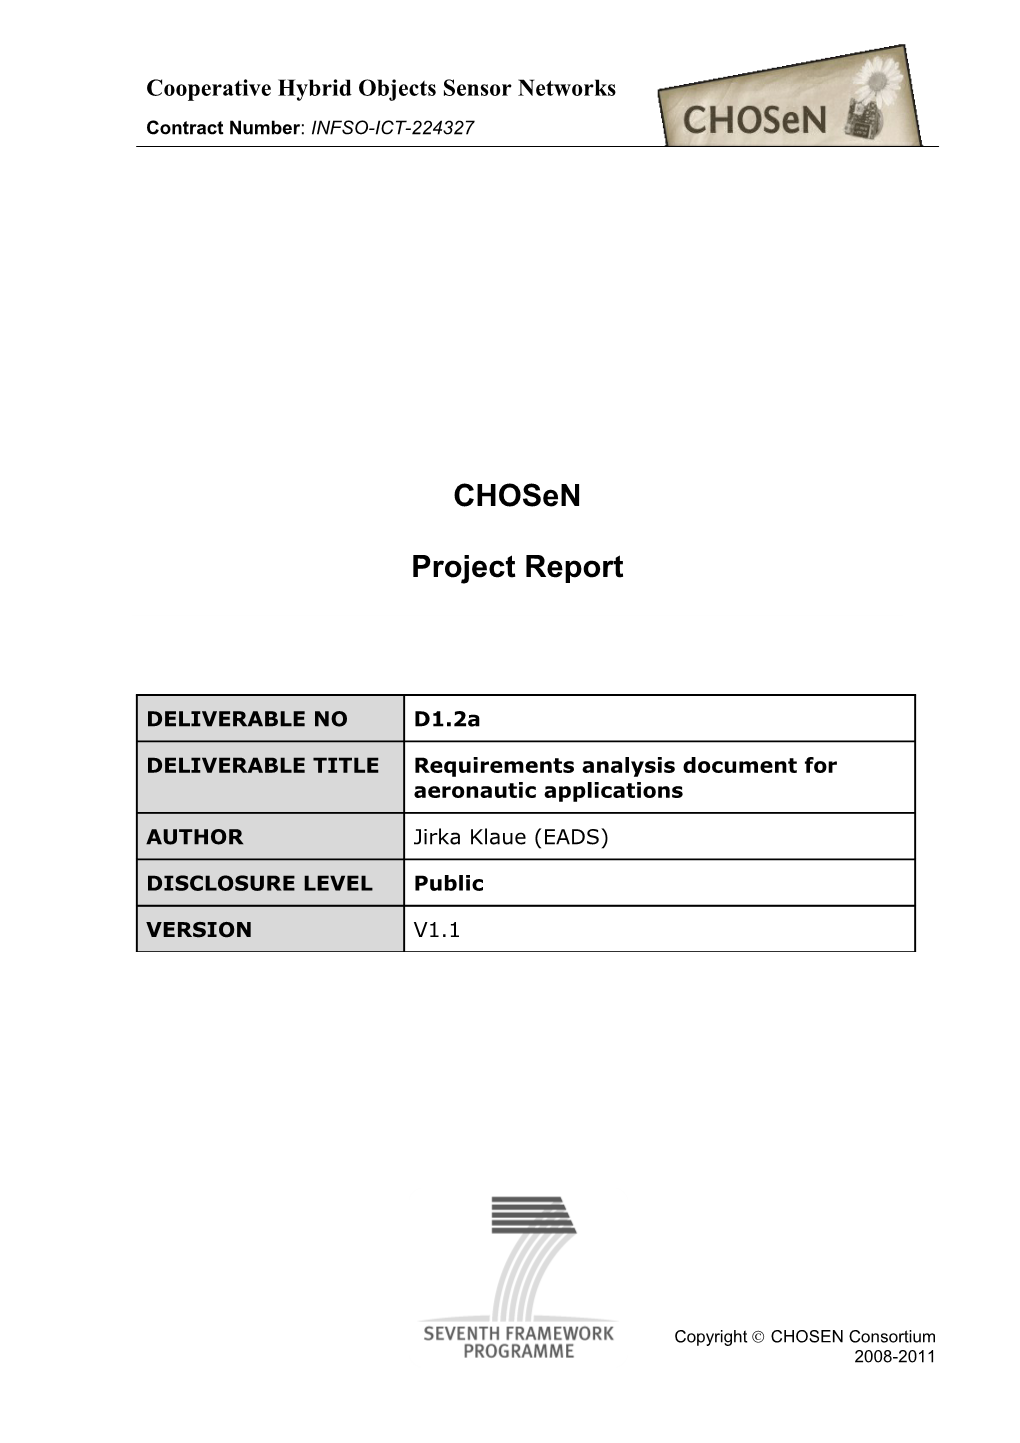 CHOSEN Project Report